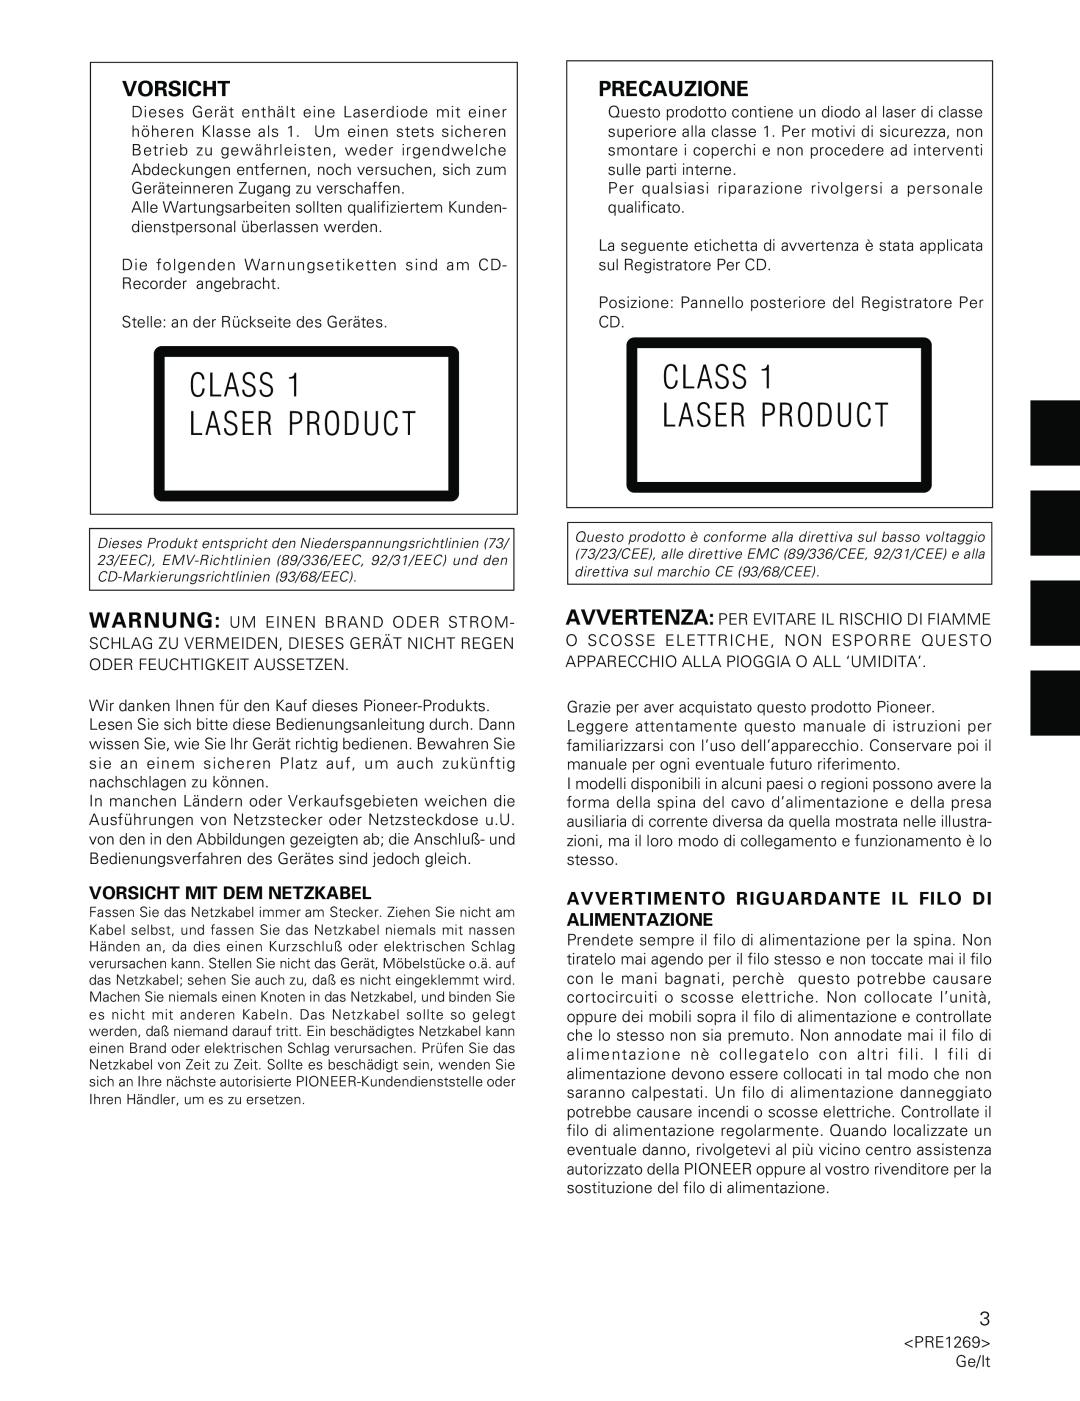 Pioneer PDR-555RW operating instructions Precauzione, Class Laser Product, Vorsicht Mit Dem Netzkabel 